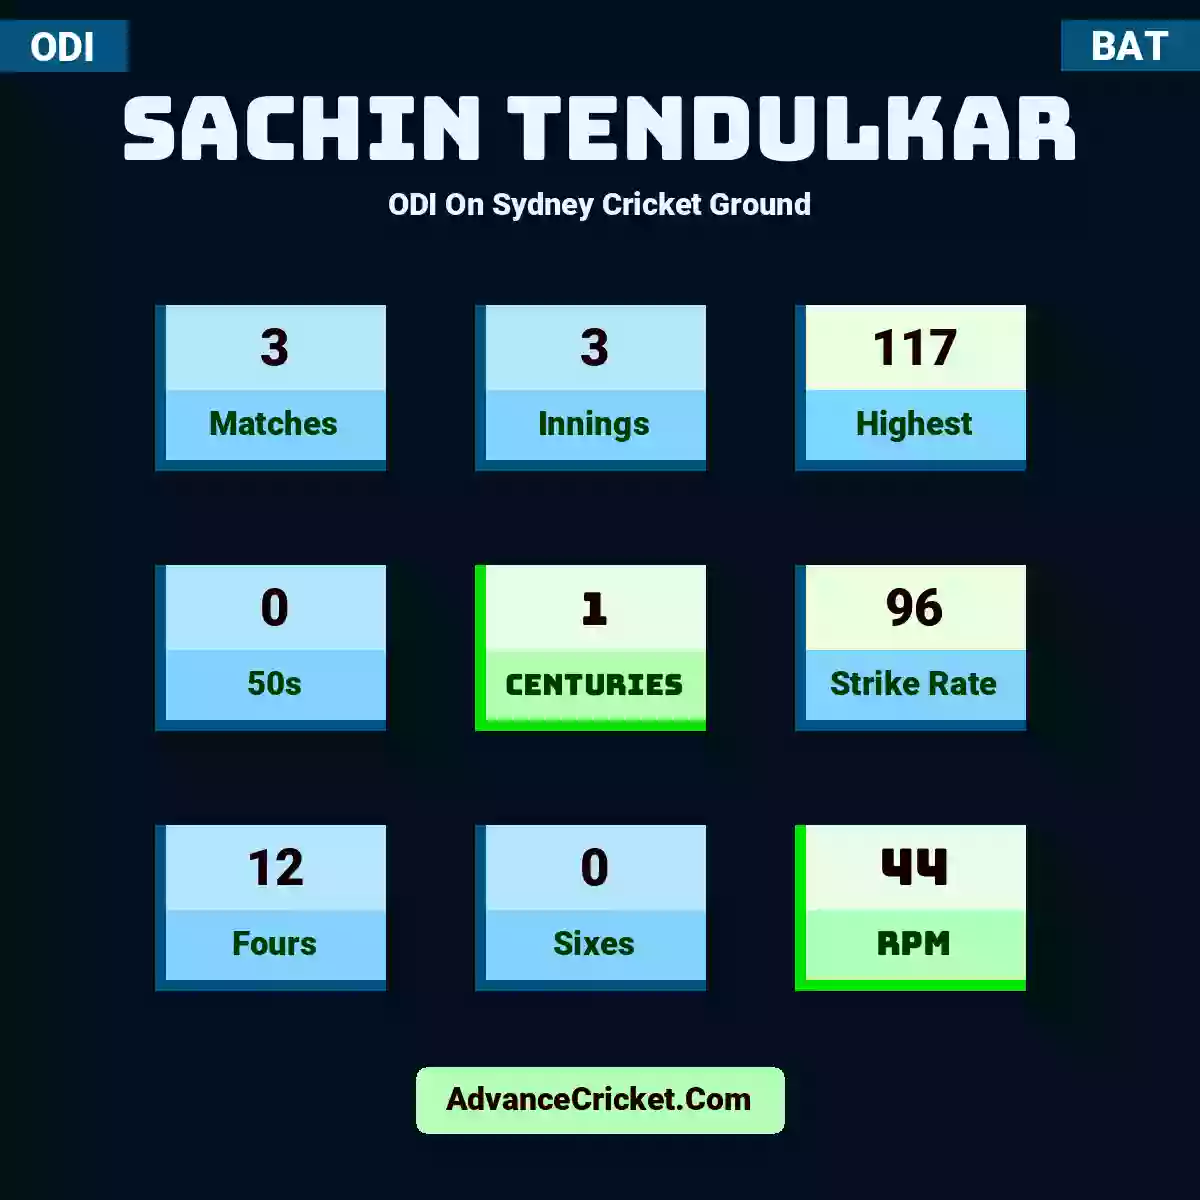 Sachin Tendulkar ODI  On Sydney Cricket Ground, Sachin Tendulkar played 3 matches, scored 117 runs as highest, 0 half-centuries, and 1 centuries, with a strike rate of 96. S.Tendulkar hit 12 fours and 0 sixes, with an RPM of 44.